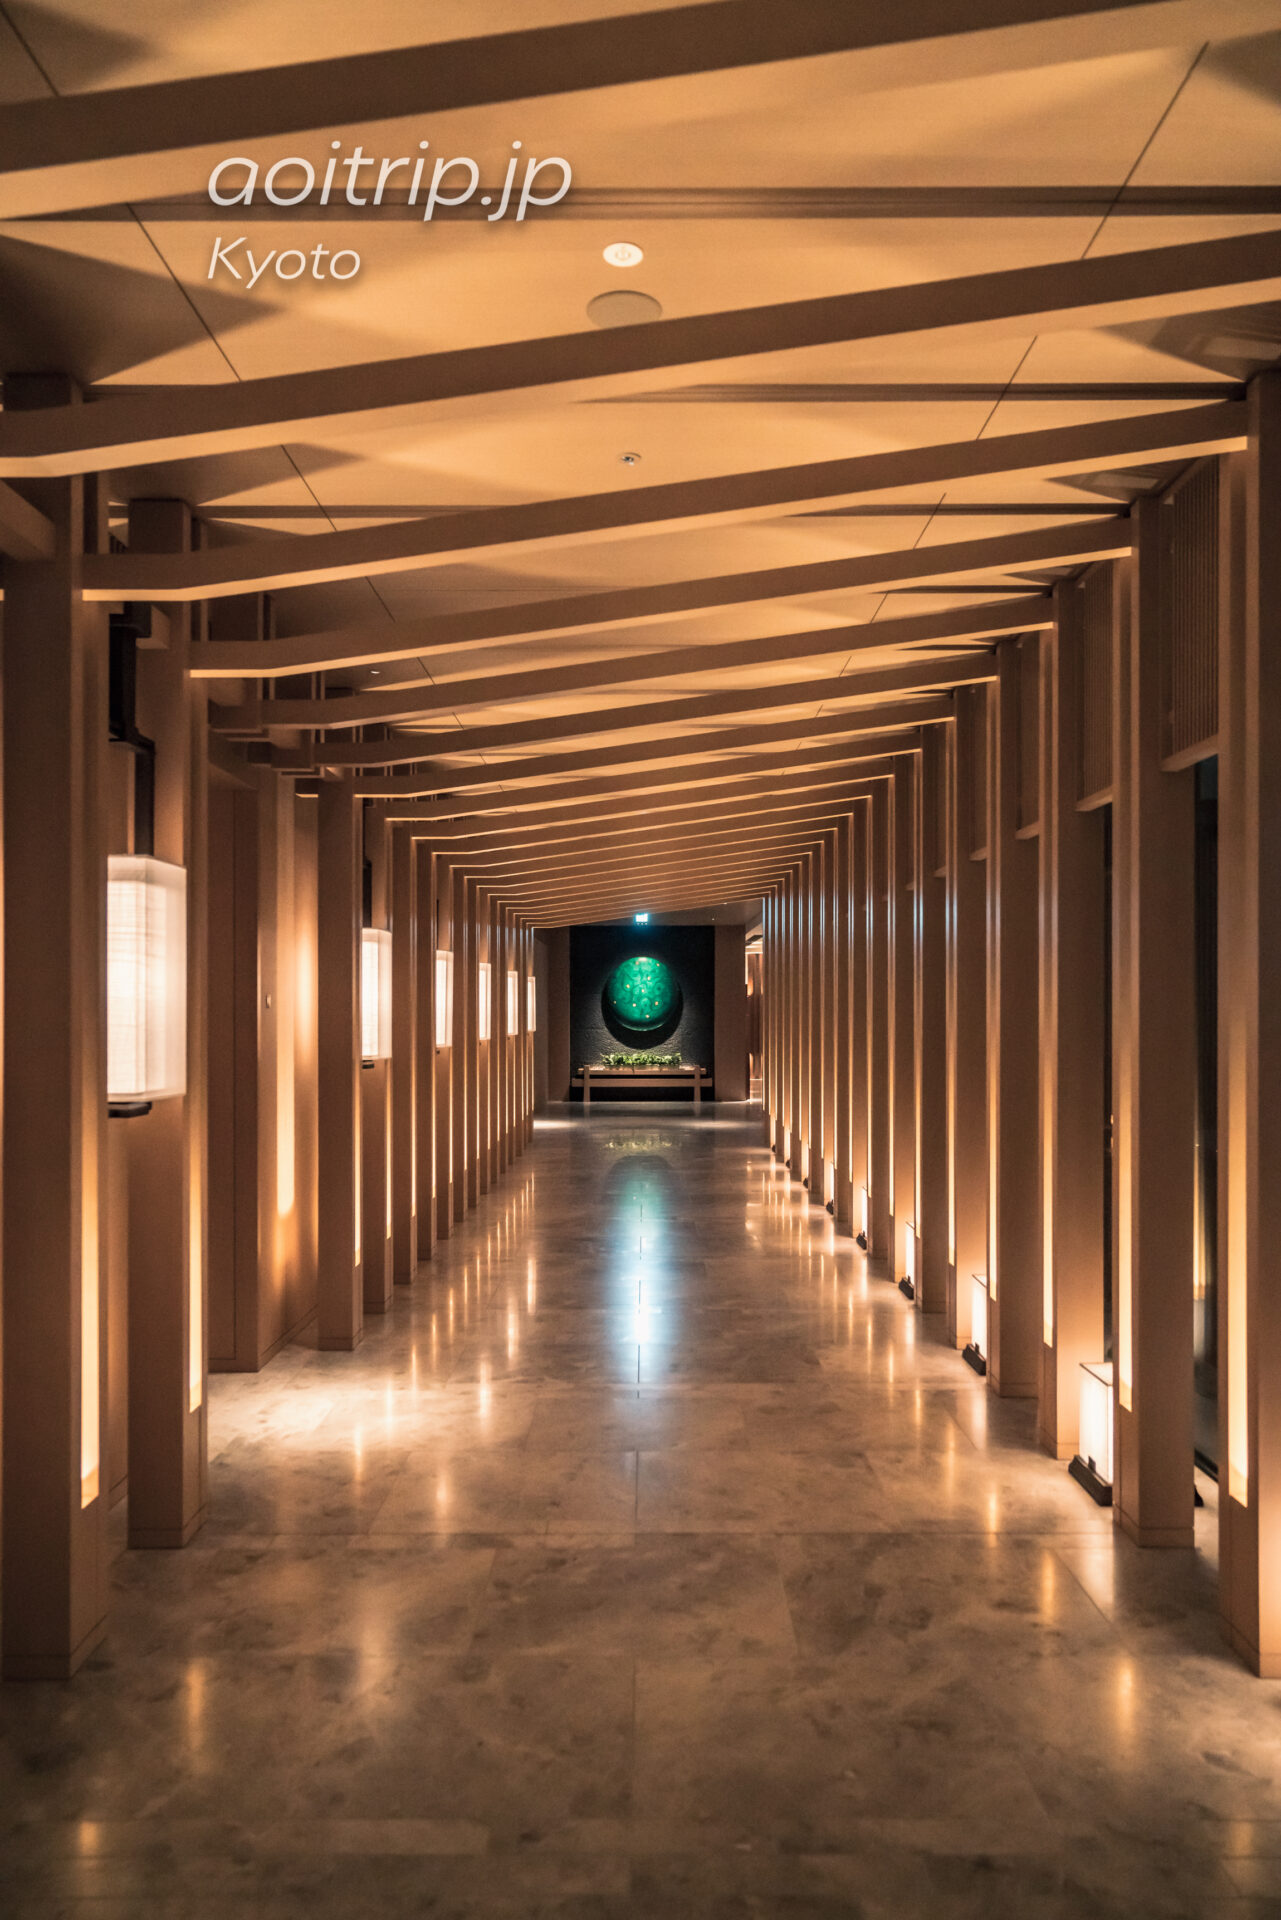 HOTEL THE MITSUI KYOTO 千本鳥居からインスピレーションを得た通路